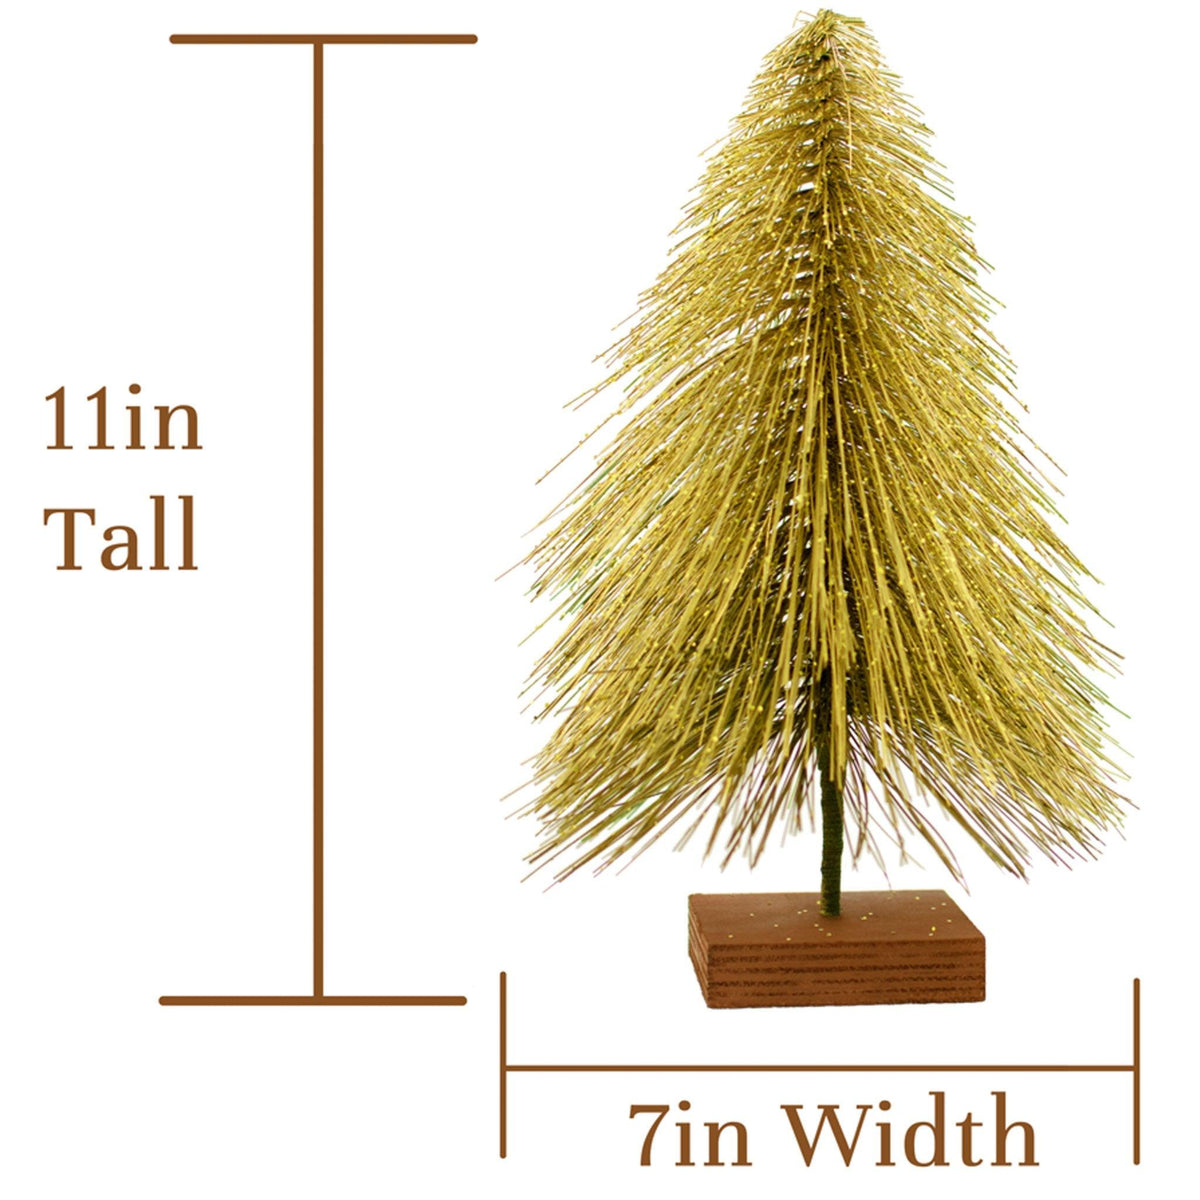 Mini Gold Bottlebrush Christmas Trees are sold at leedisplay.com. Size of the mini bottlebrush tree.